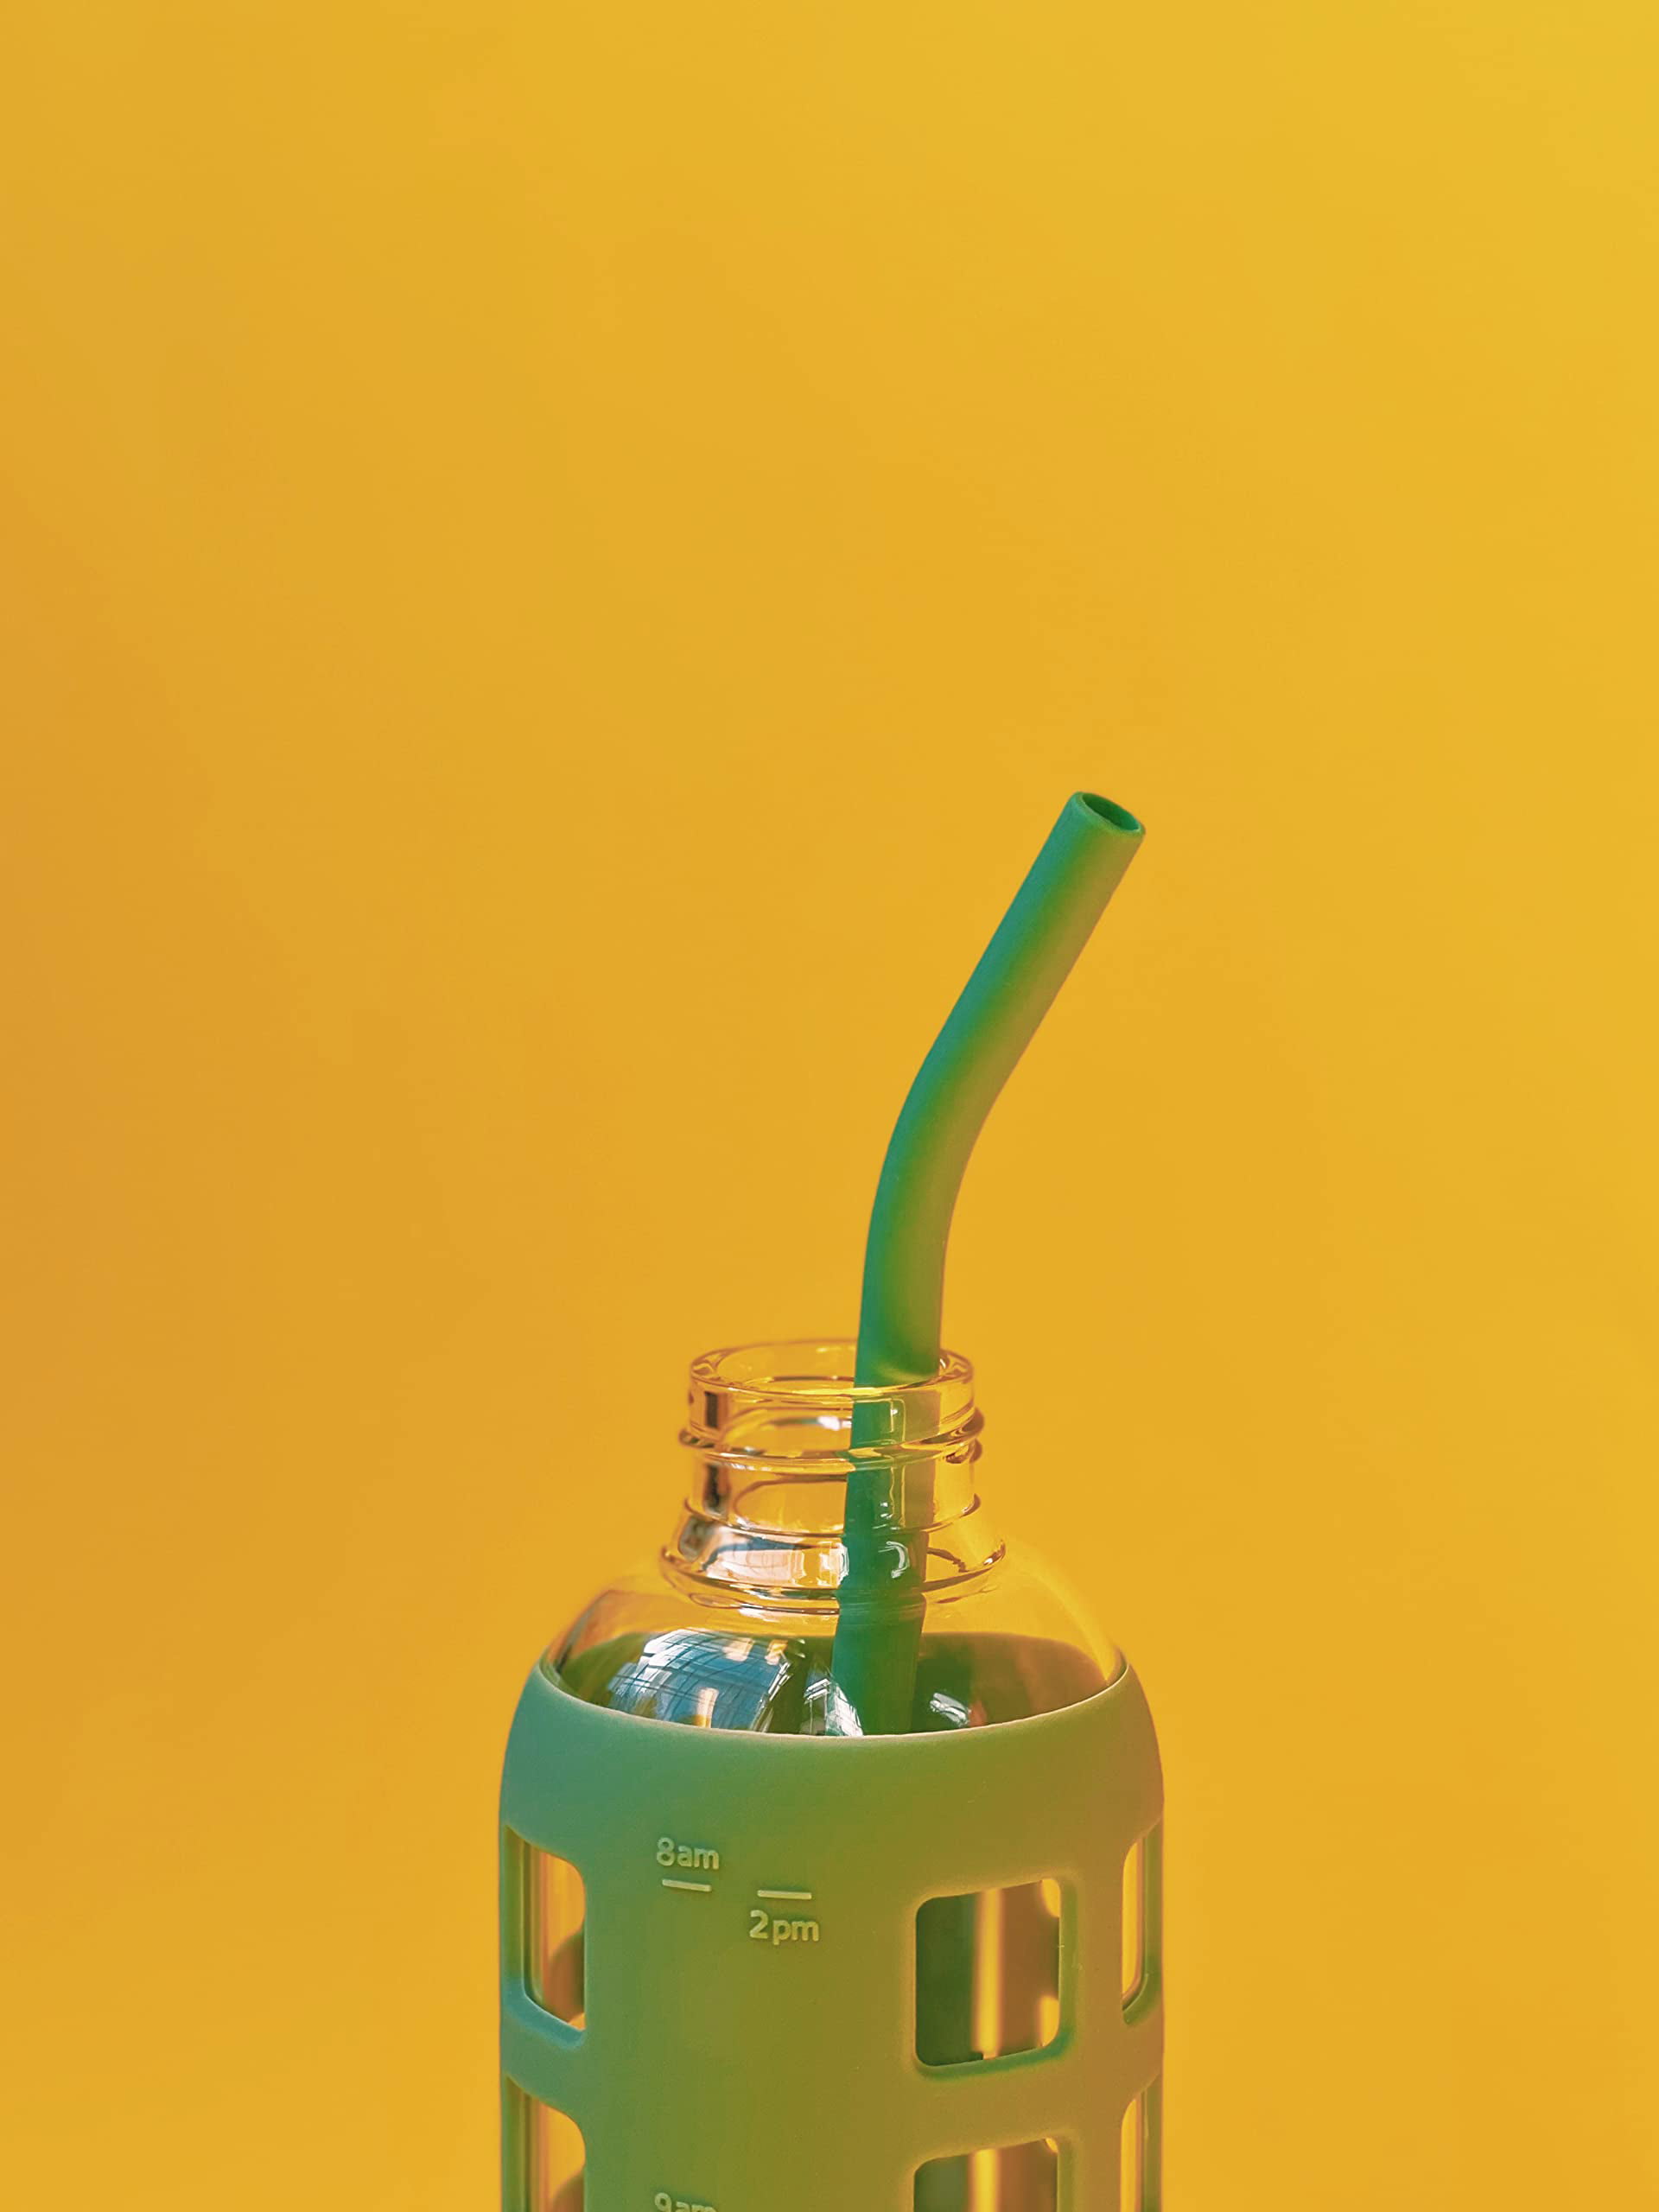 14-Piece Silicone Straw & Straw Cleaner Set – Manna Hydration